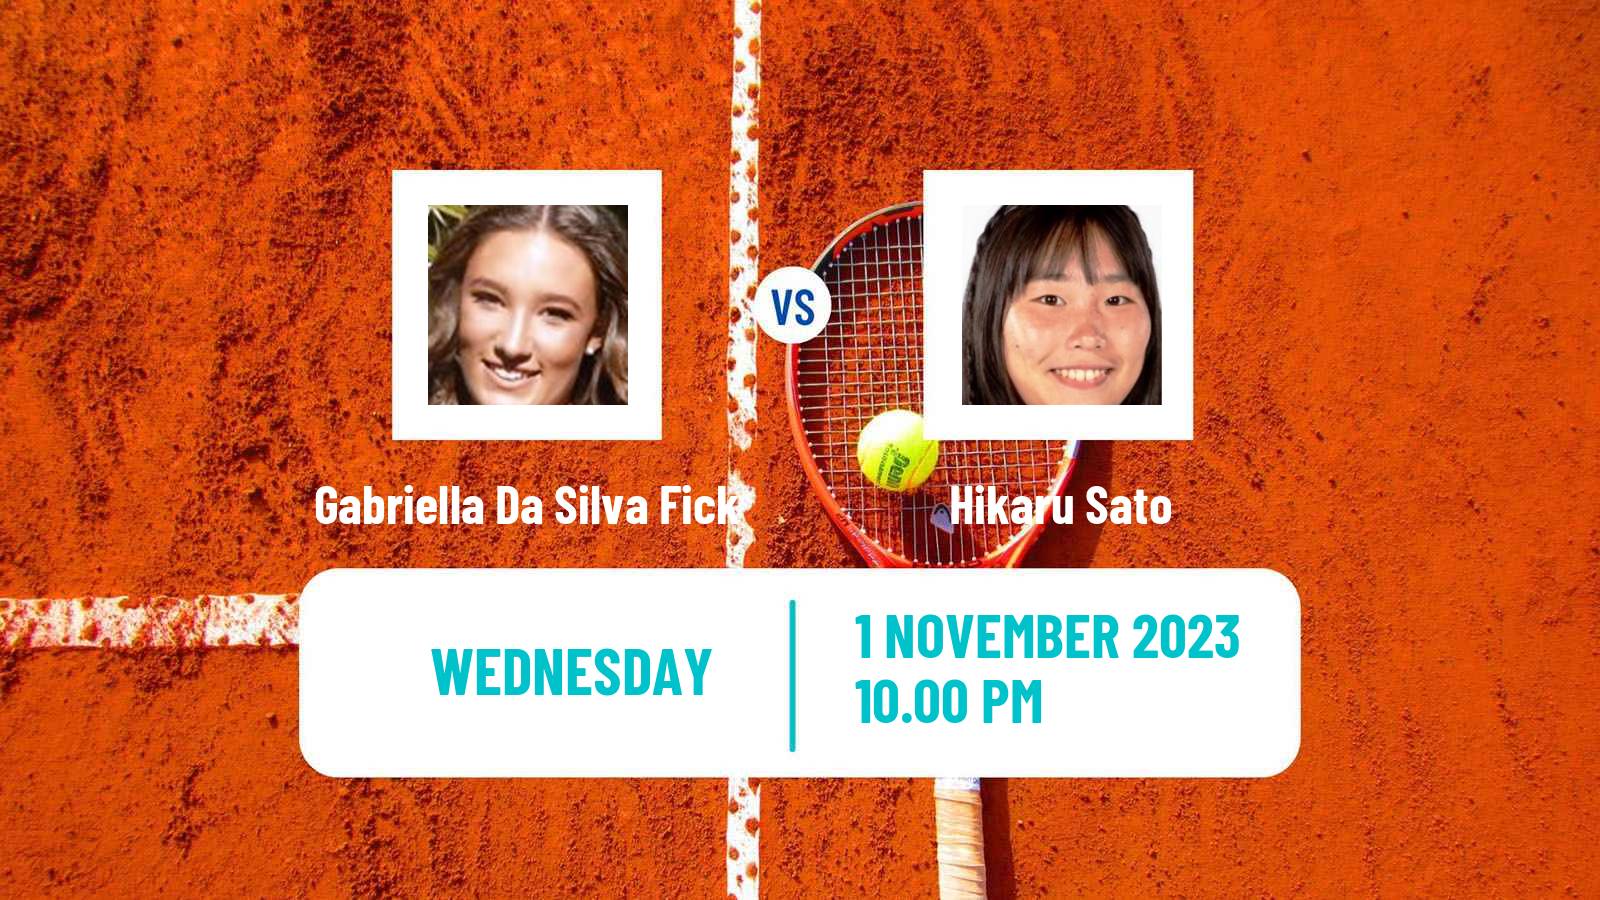 Tennis ITF W60 Sydney Women Gabriella Da Silva Fick - Hikaru Sato